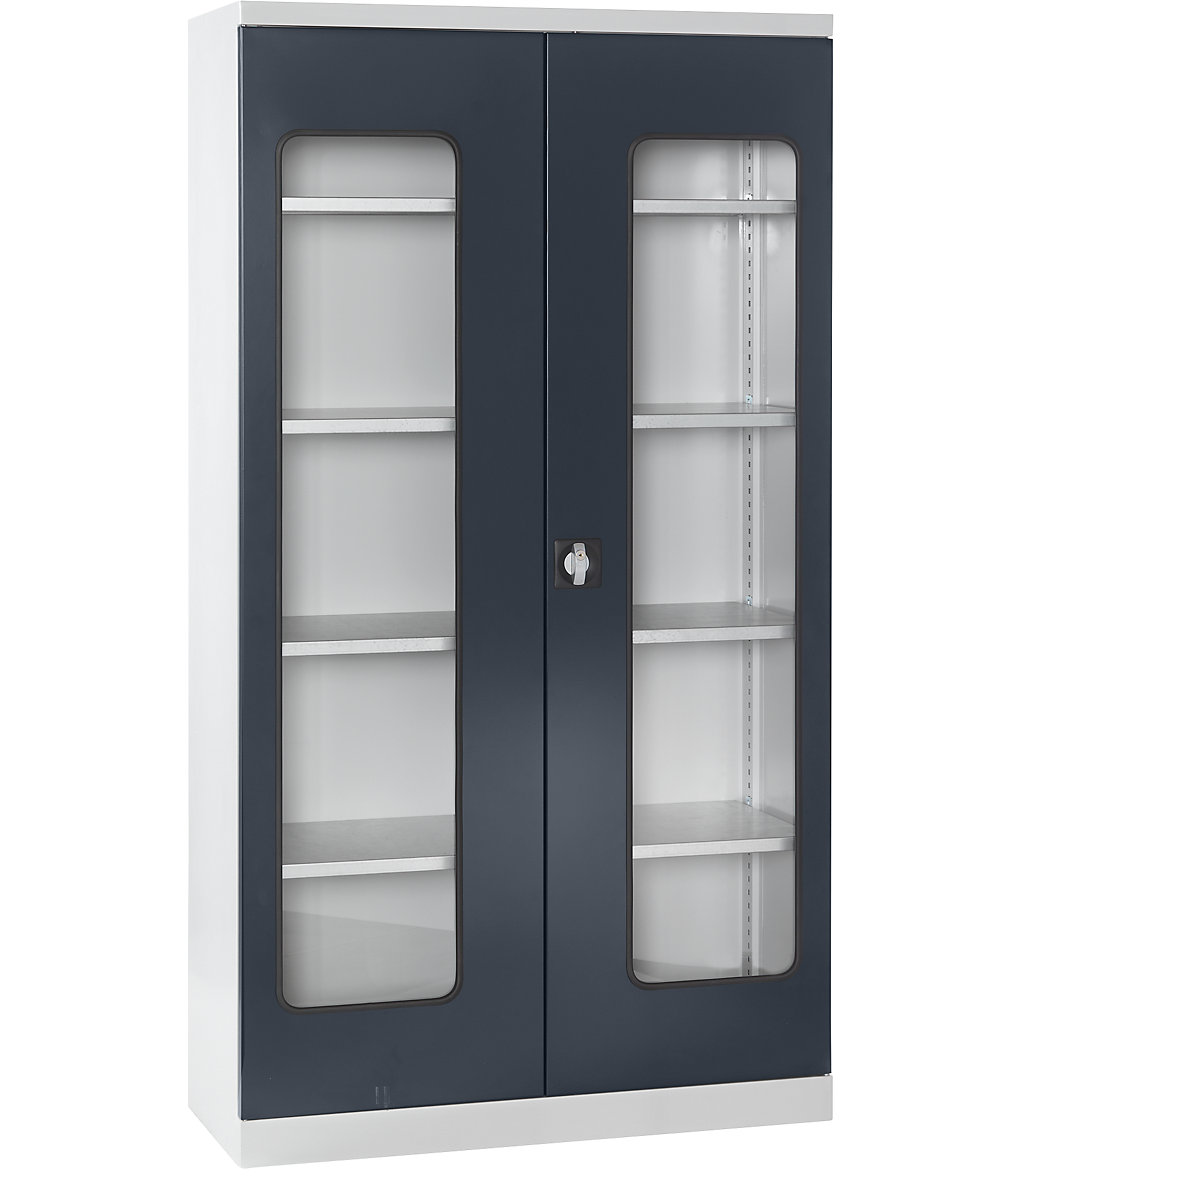 Storage cupboard – eurokraft pro, depth 450 mm, 4 shelves and vision panel doors, grey doors-10